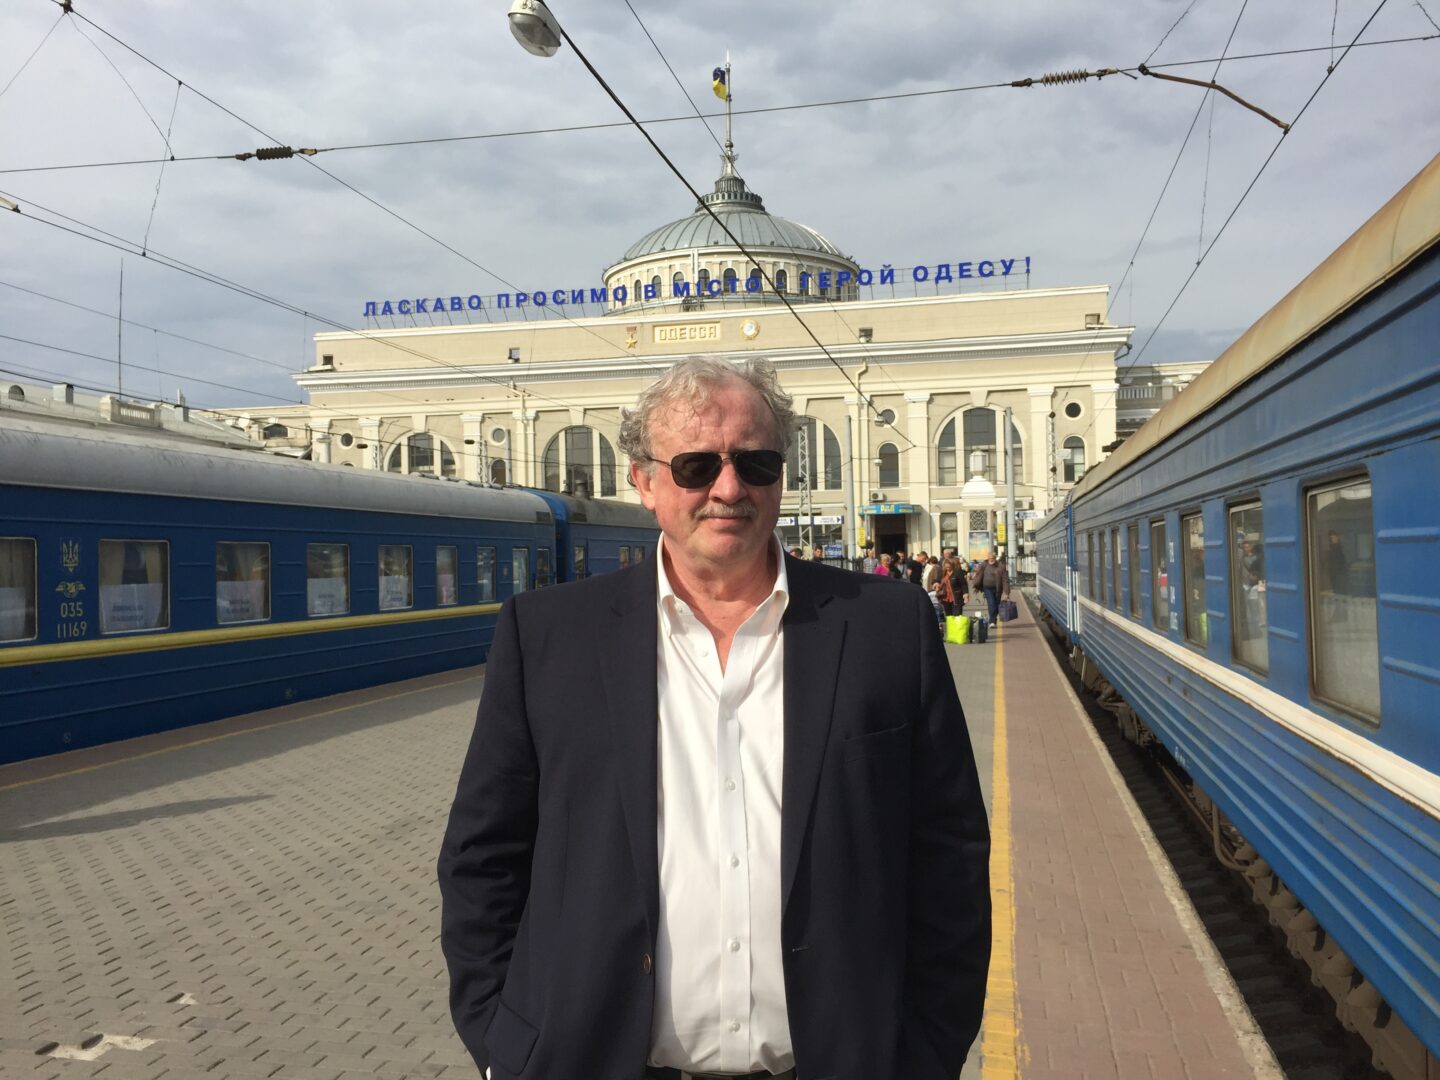 At the Train Station in Odessa, Ukraine